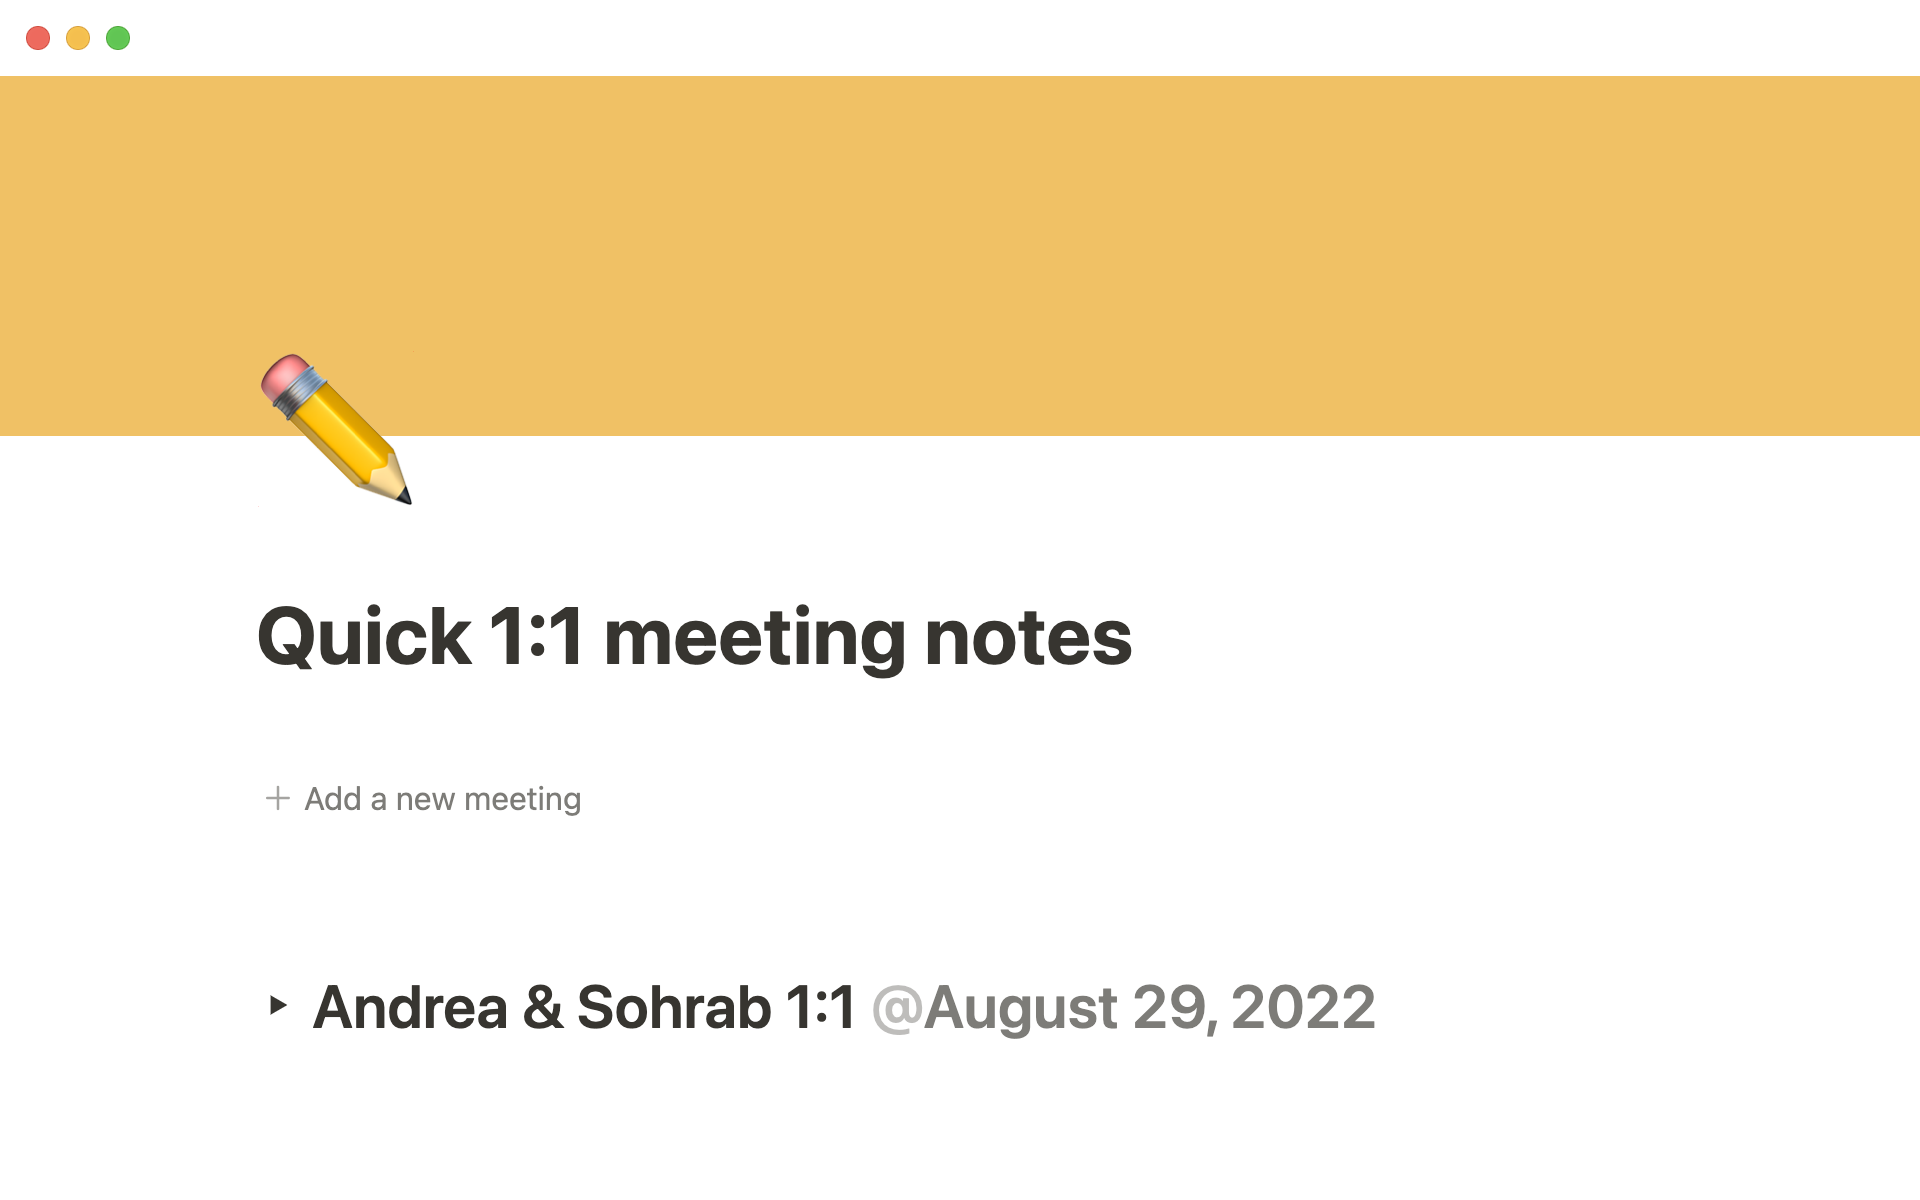 En forhåndsvisning av mal for Quick 1:1 meeting notes